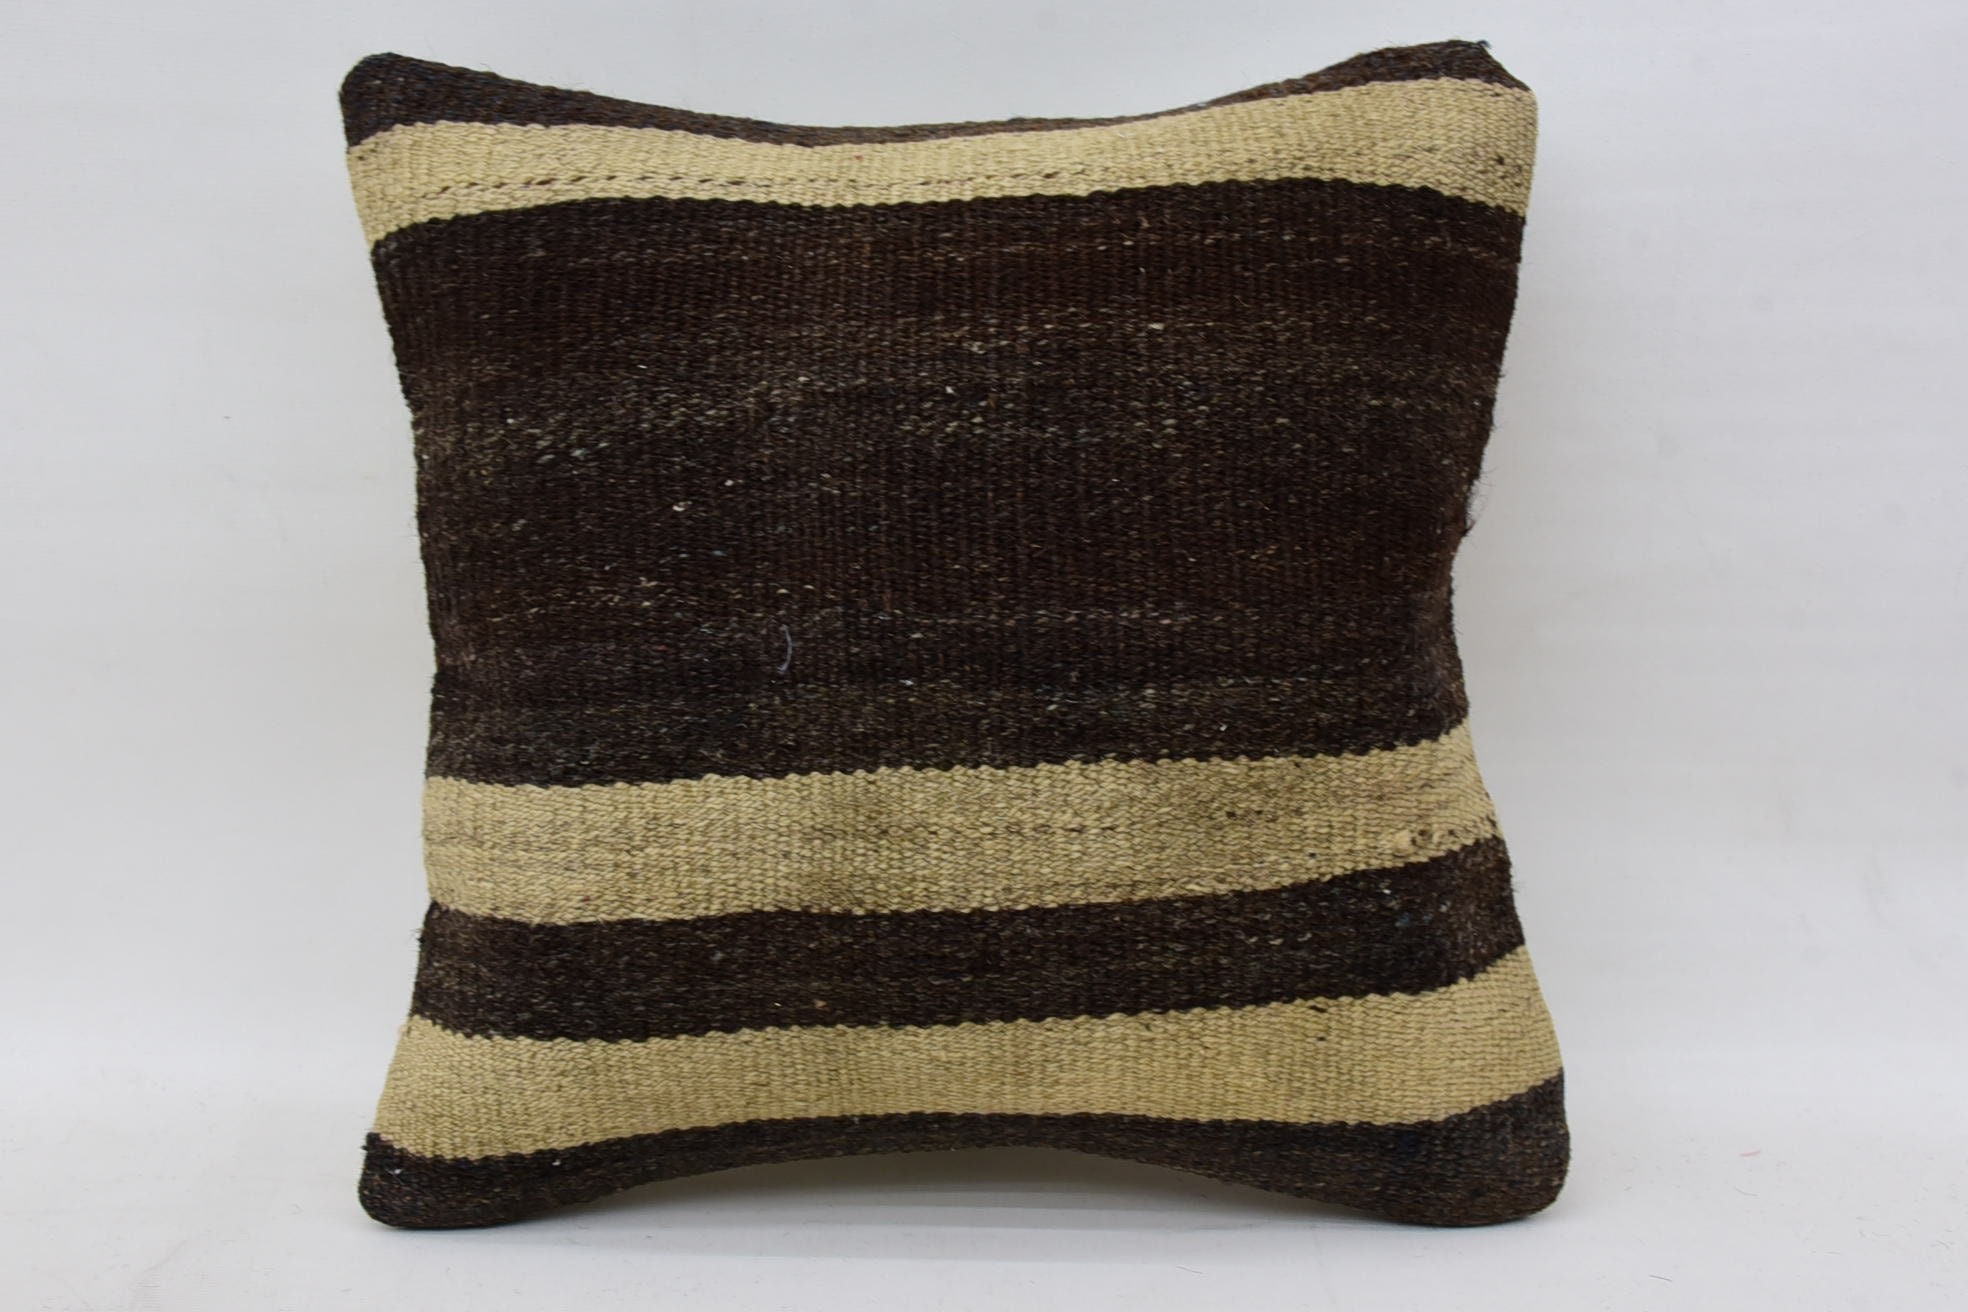 14"x14" Brown Cushion Cover, Crochet Pattern Pillow Case, Home Decor Pillow, Luxury Pillow Cover, Kilim Pillow, Gift Pillow